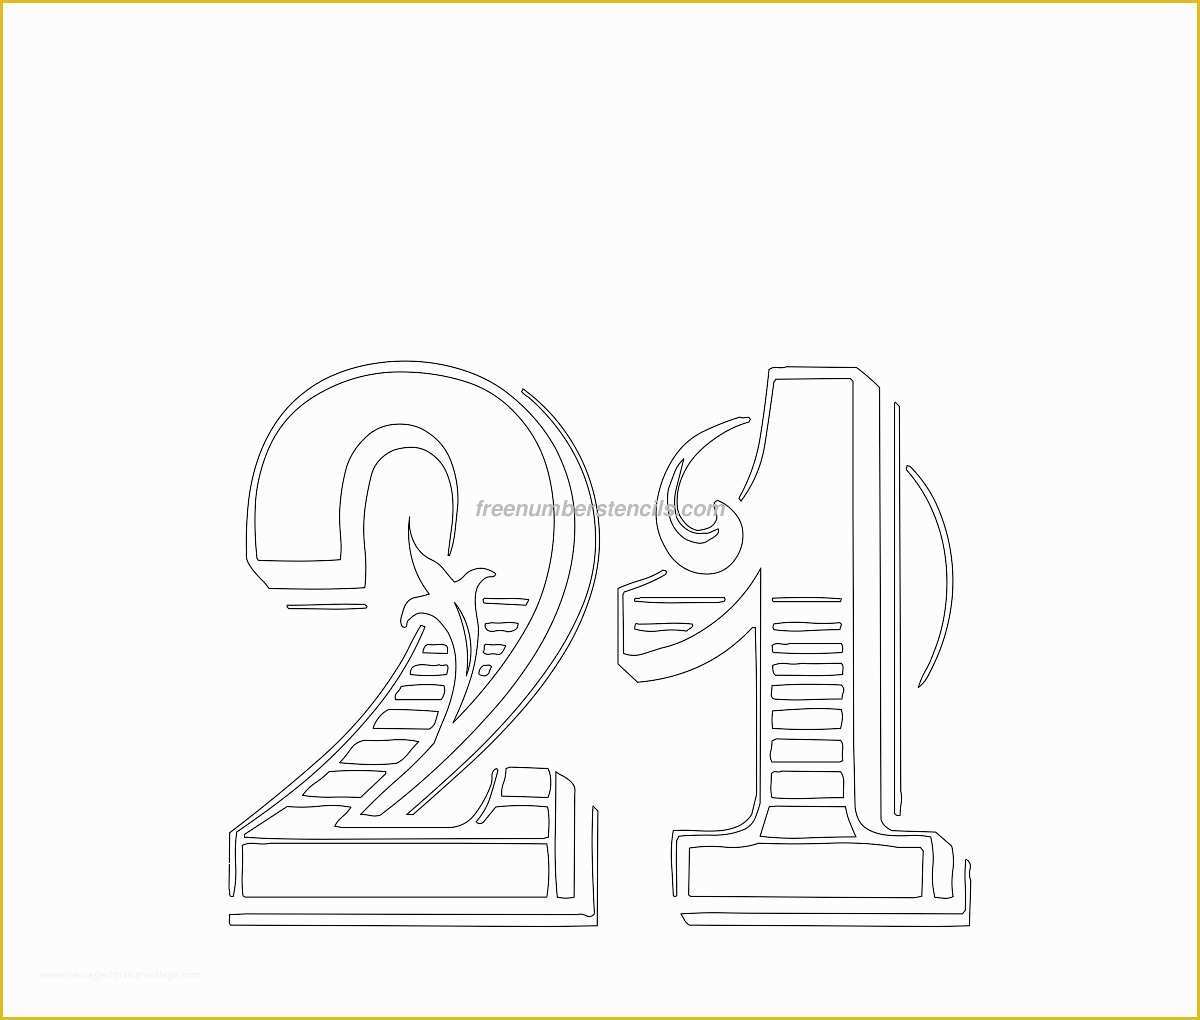 Free Printing Press Website Templates Of Free Decorative 21 Number Stencil Freenumberstencils